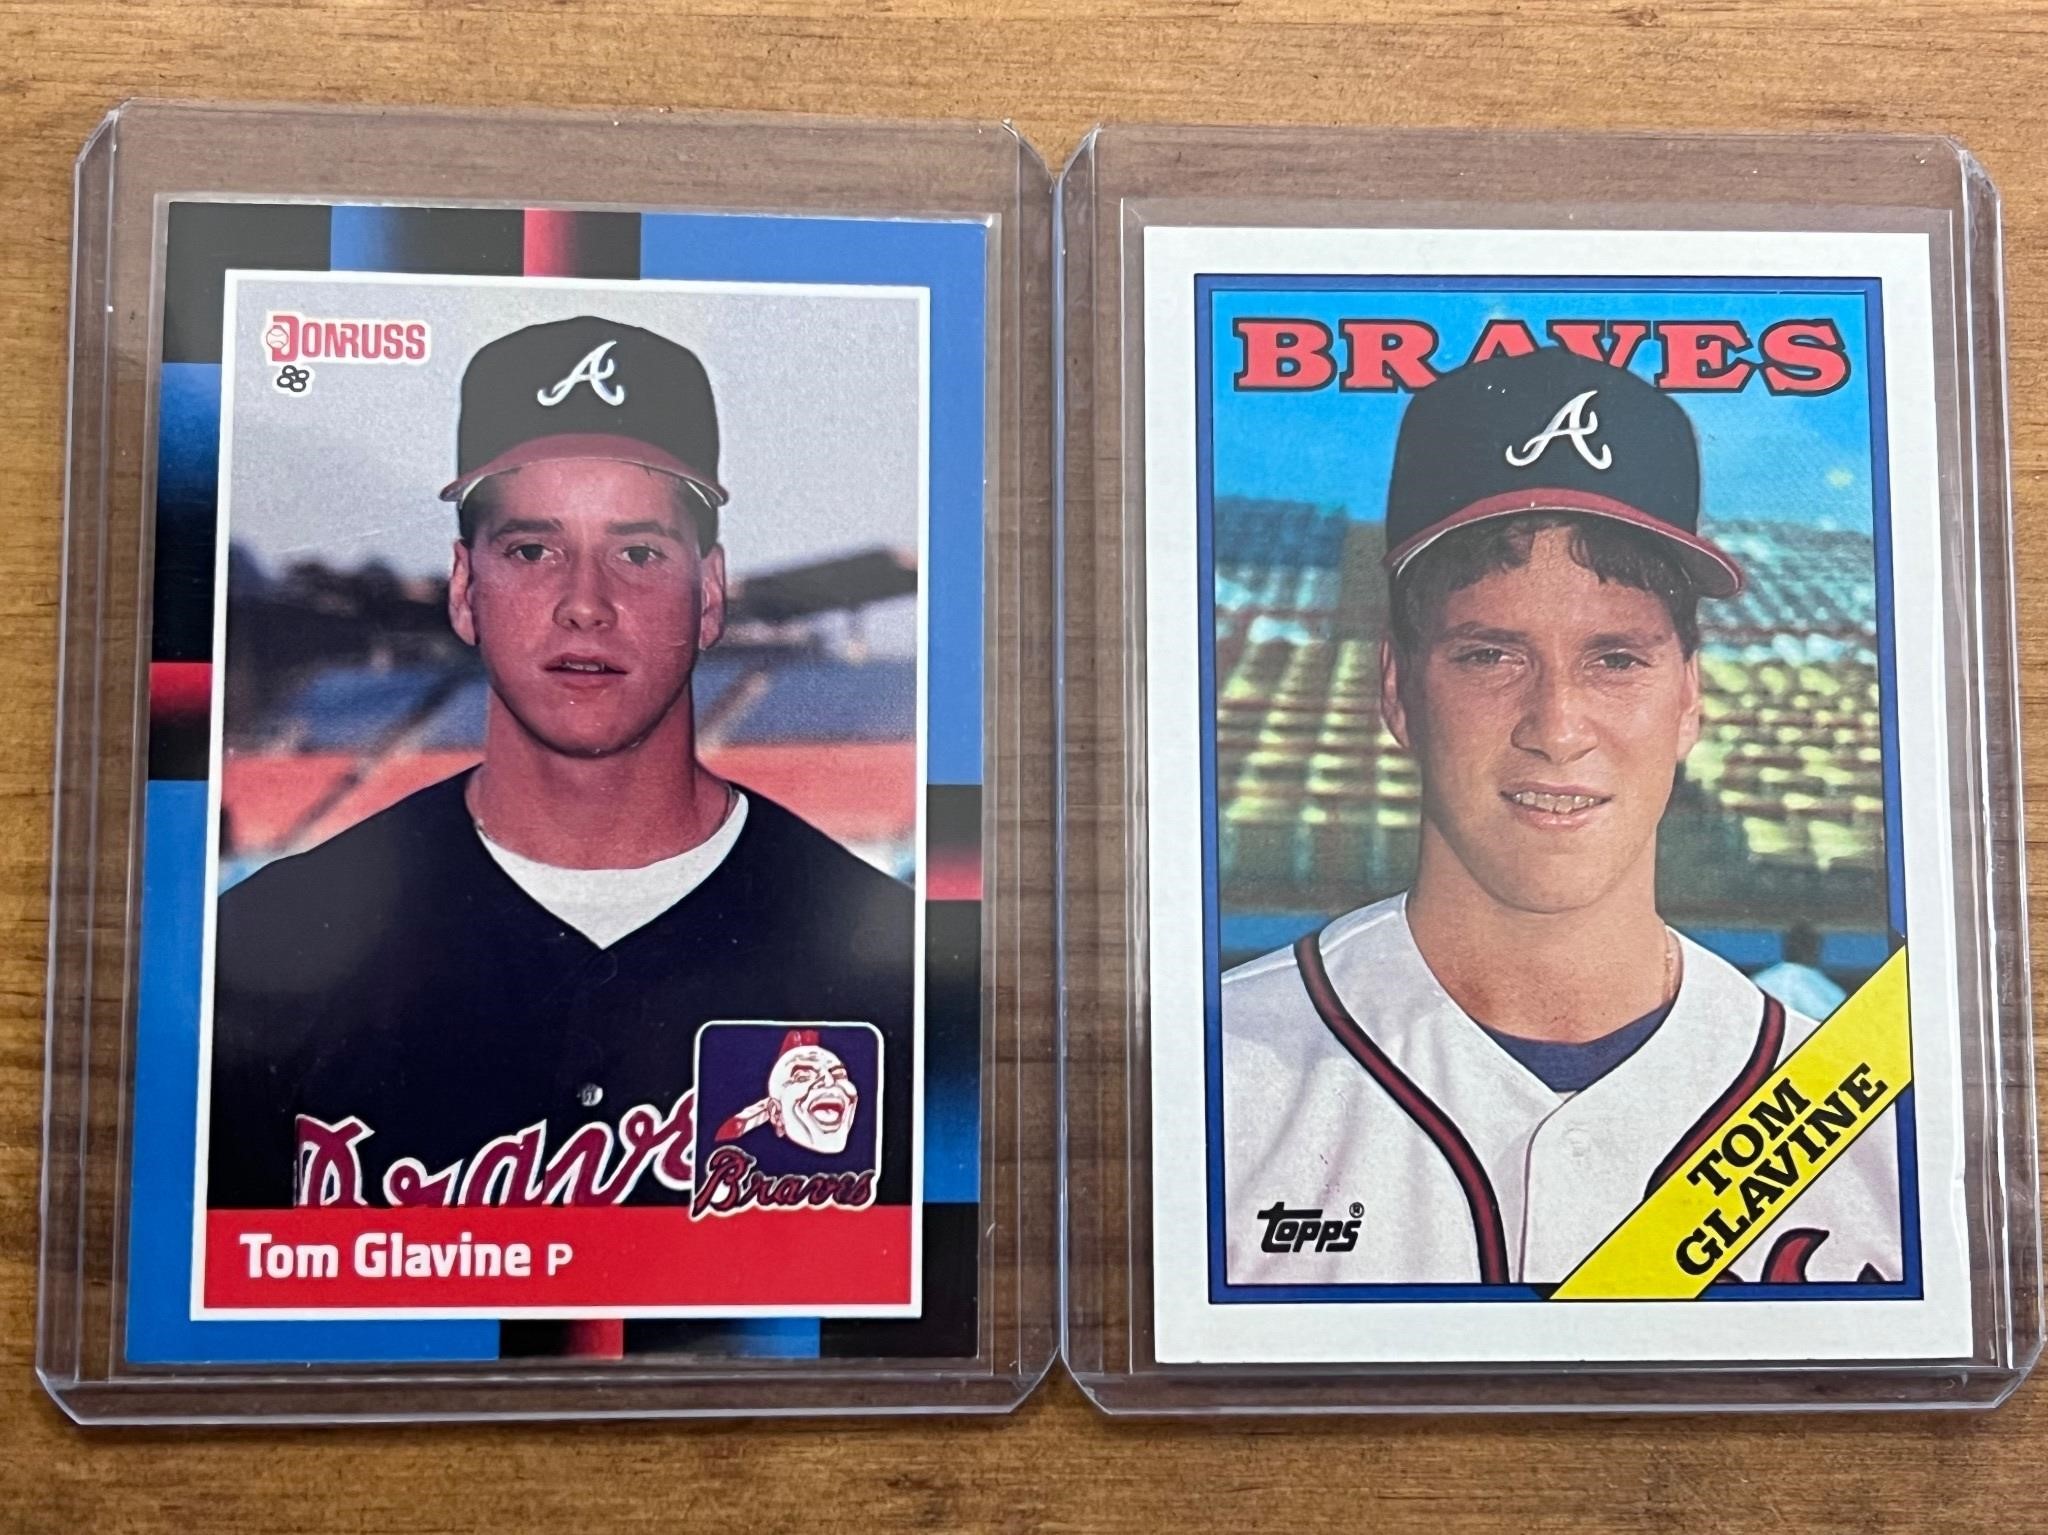 1987 & 1988 Tom Glavine MLB cards